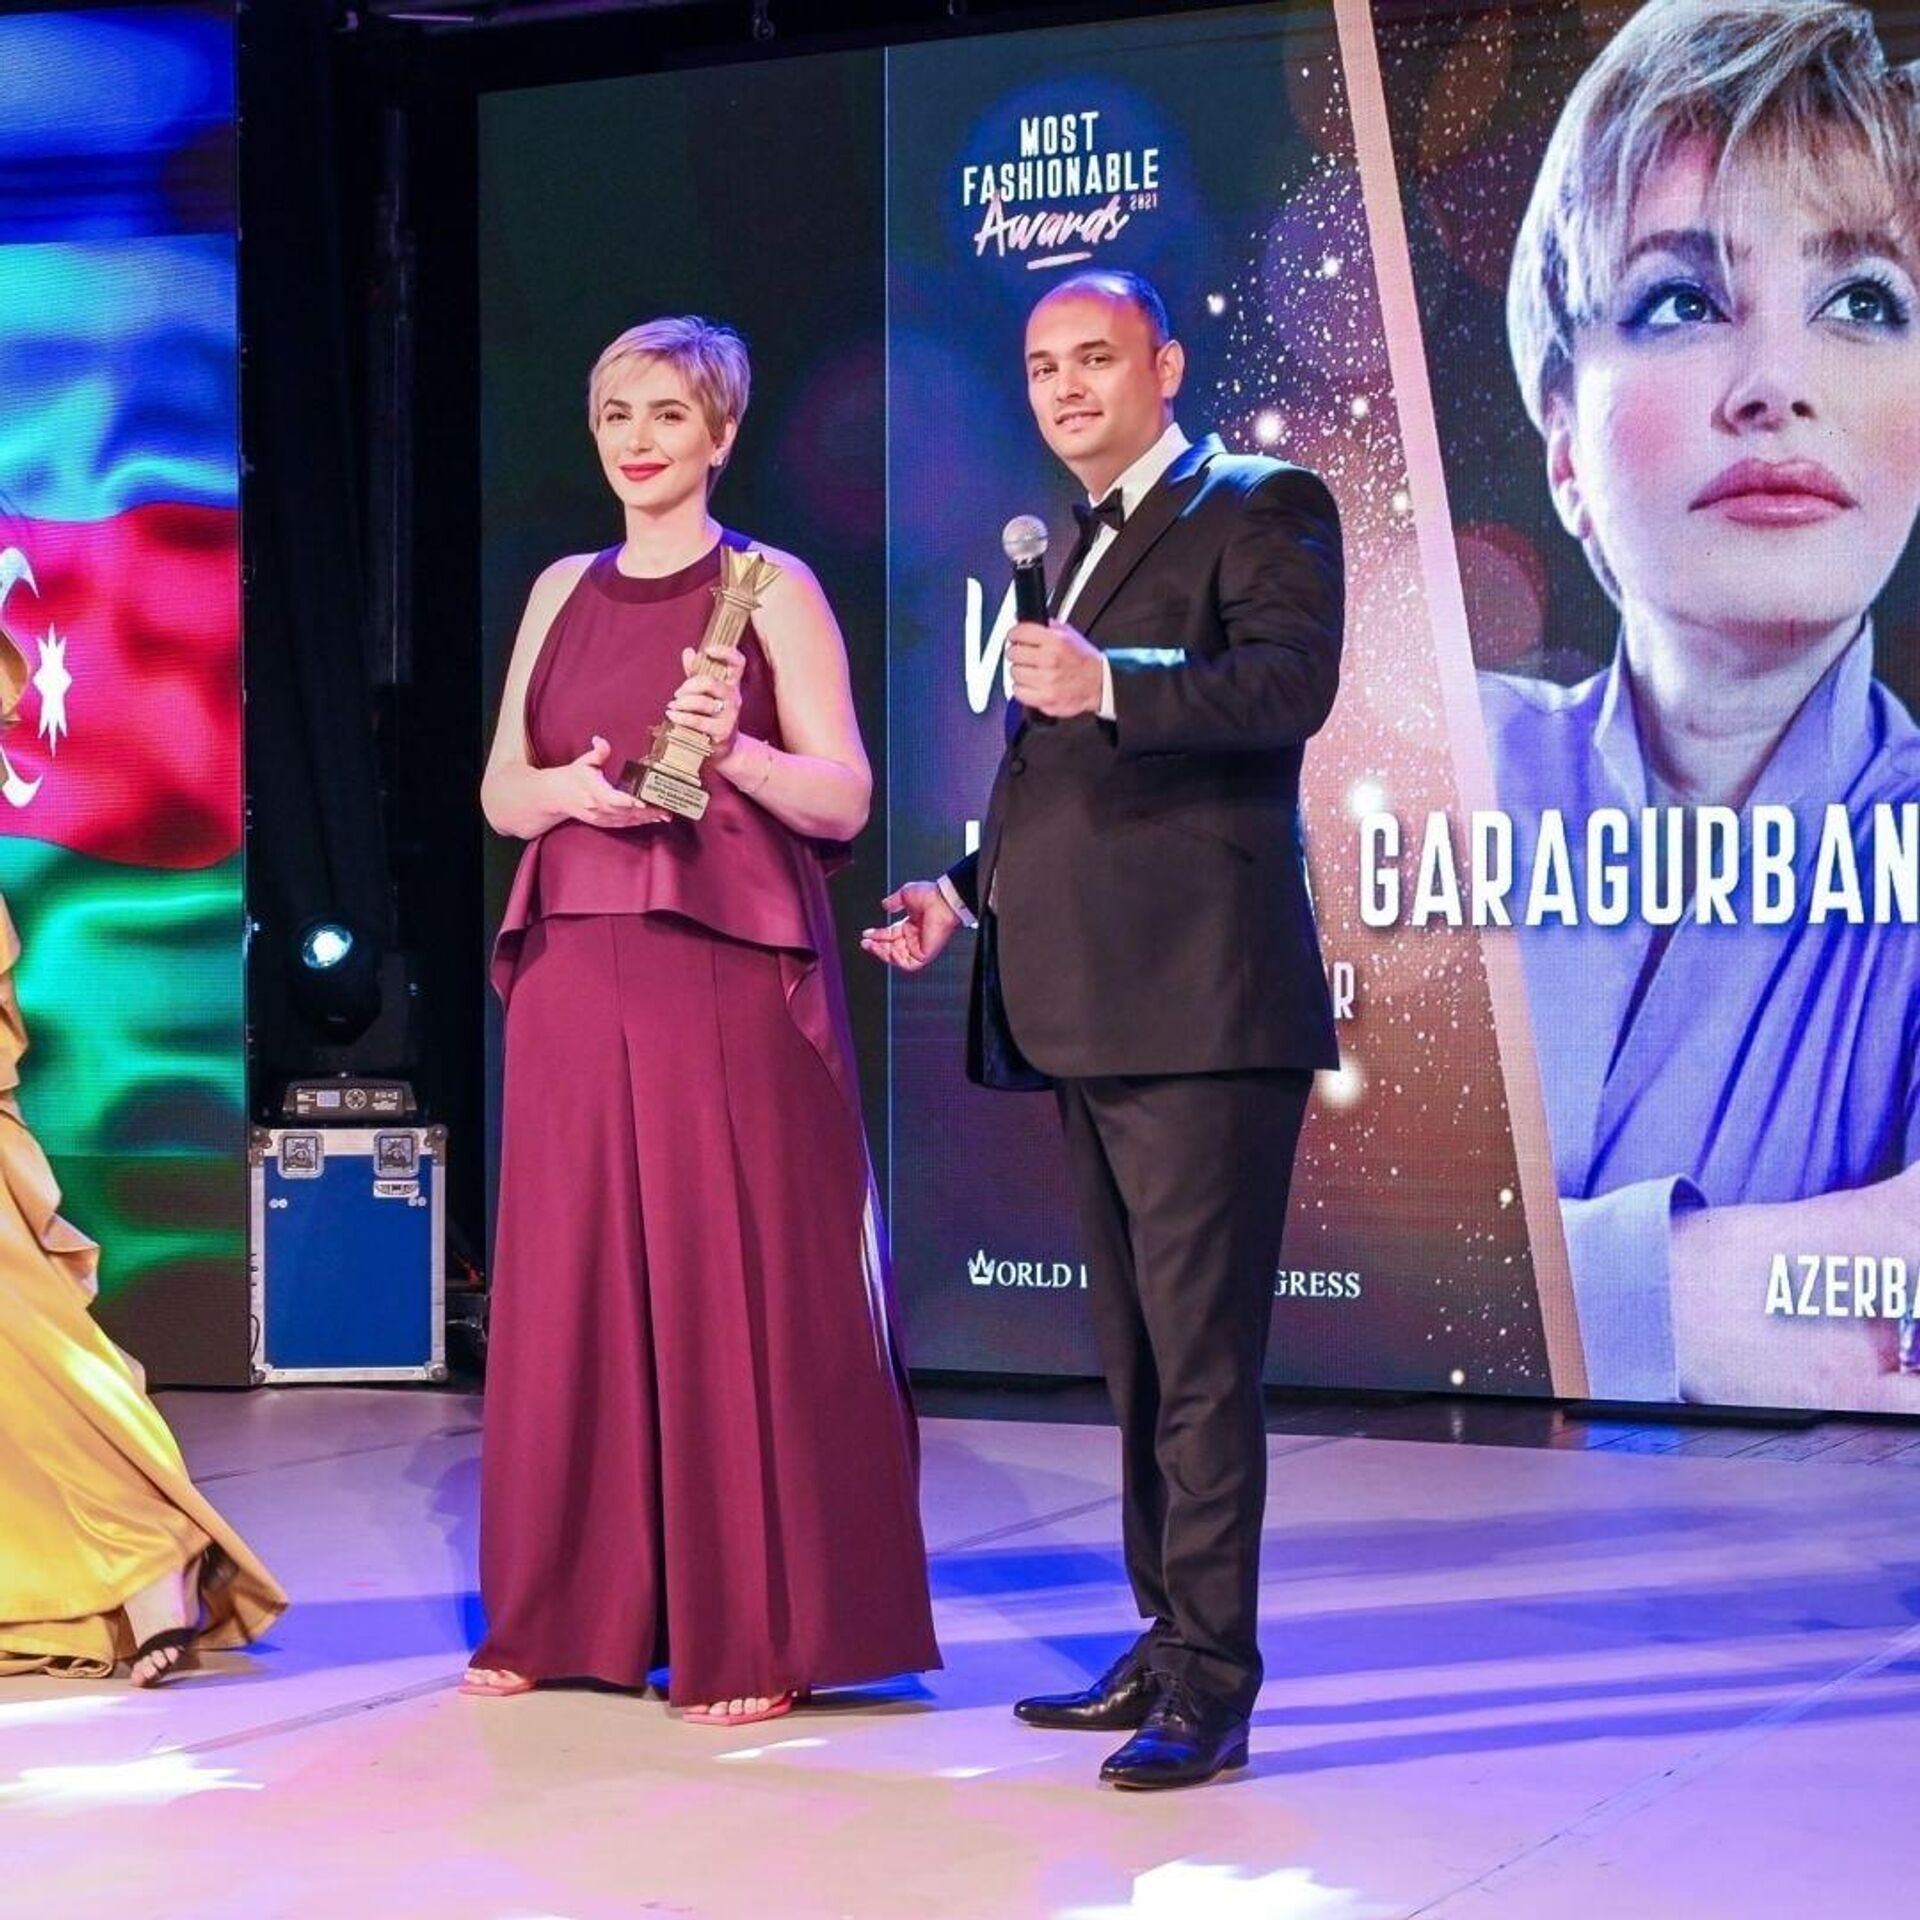 Азербайджанки стали обладателями международной премии Most Fashionable Awards 2022  - Sputnik Азербайджан, 1920, 23.08.2022